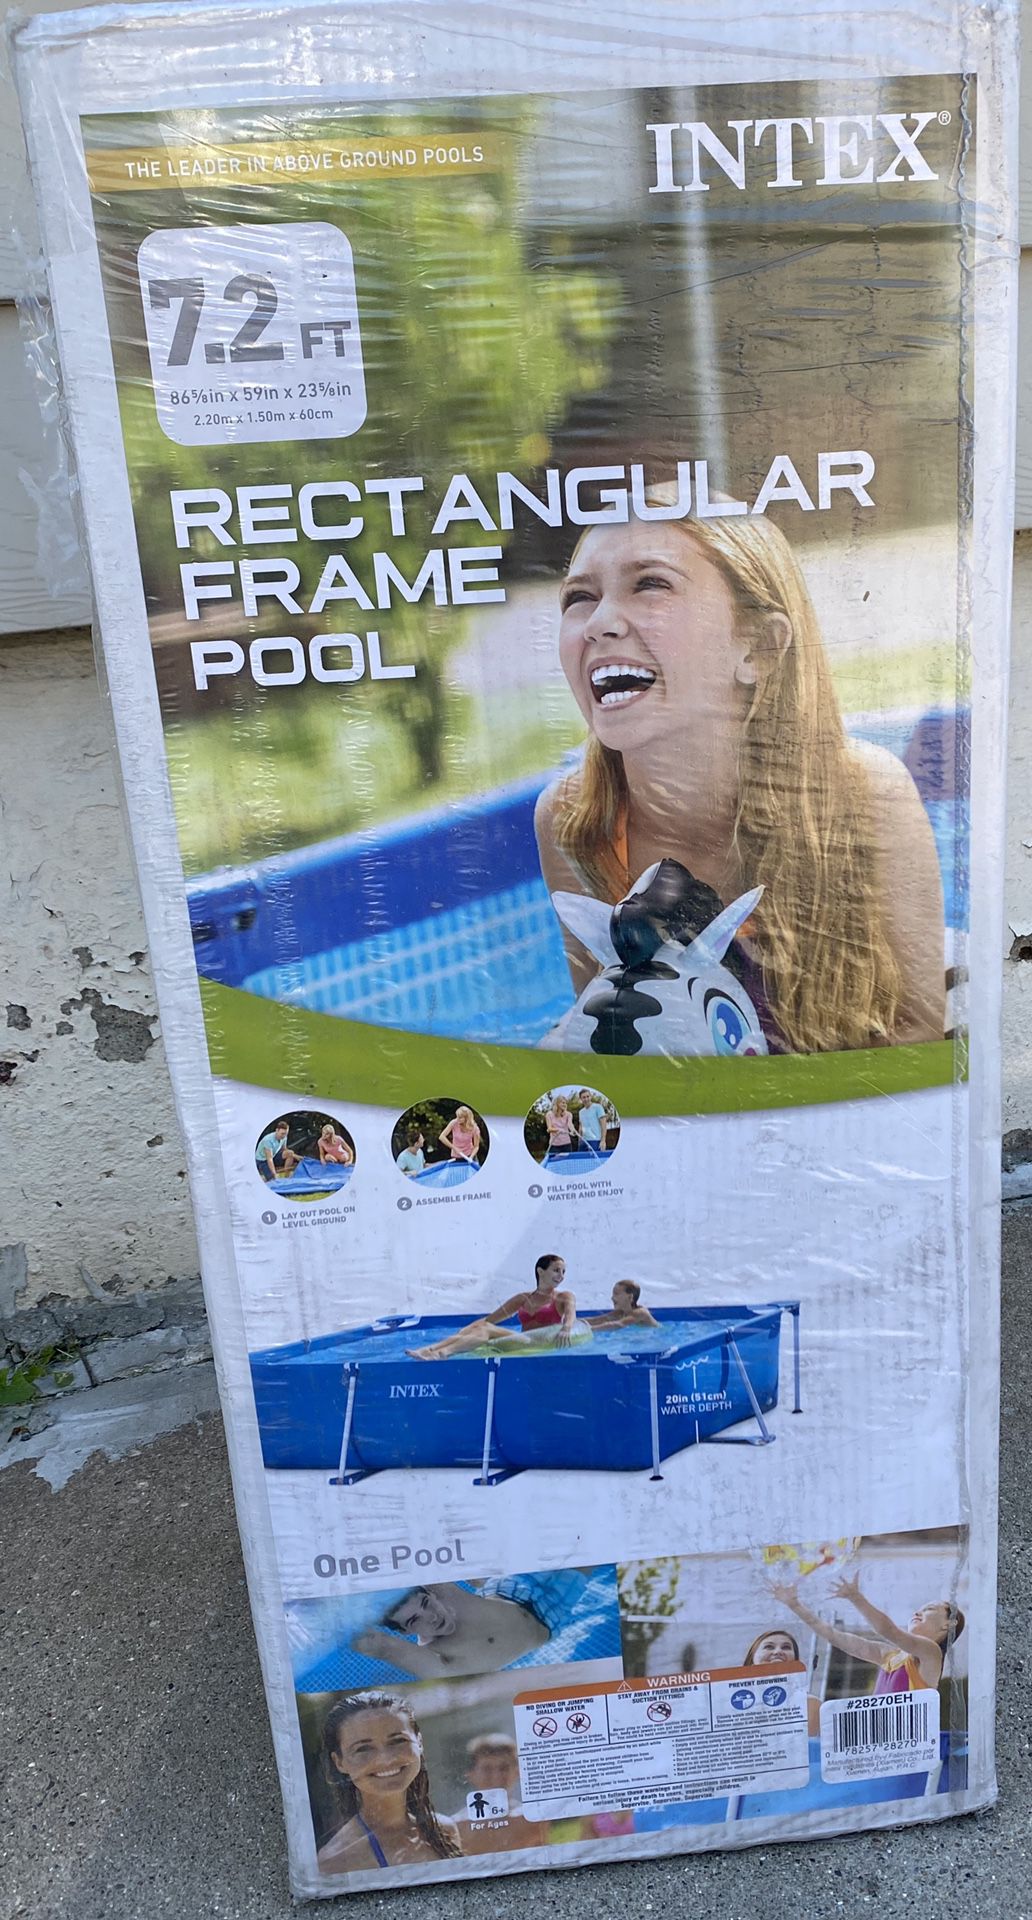 Rectangular frame pool $200